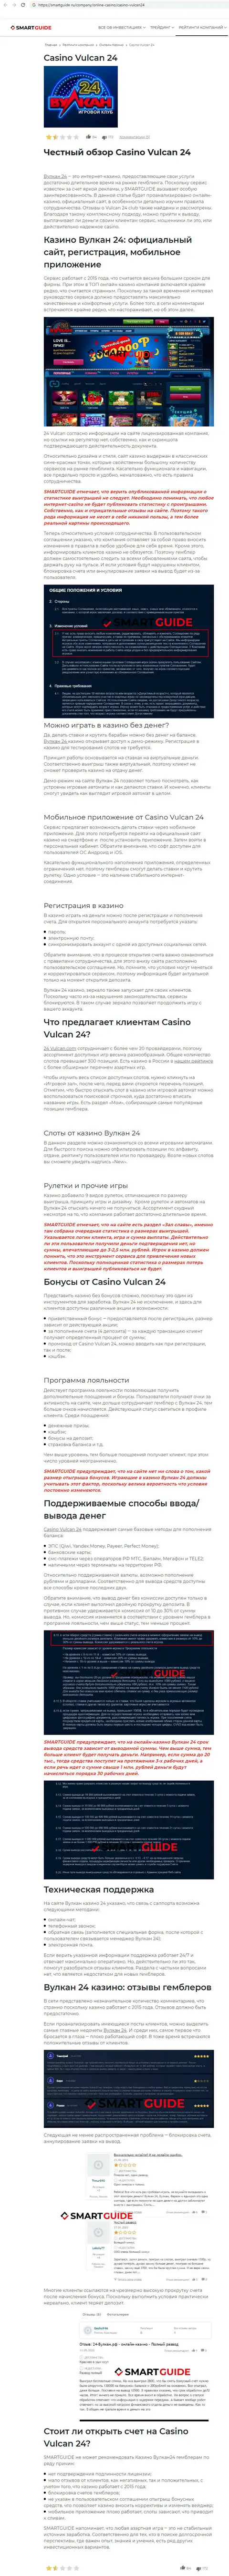 Веб -сайт SmartGuide RU не рекомендує офісу вулкан 24' data-src='/Privju_Img/810000/810408_sayt_smartguide_ru_ne_rekomenduet_kontoru_kidal_vulkan_24.jpg